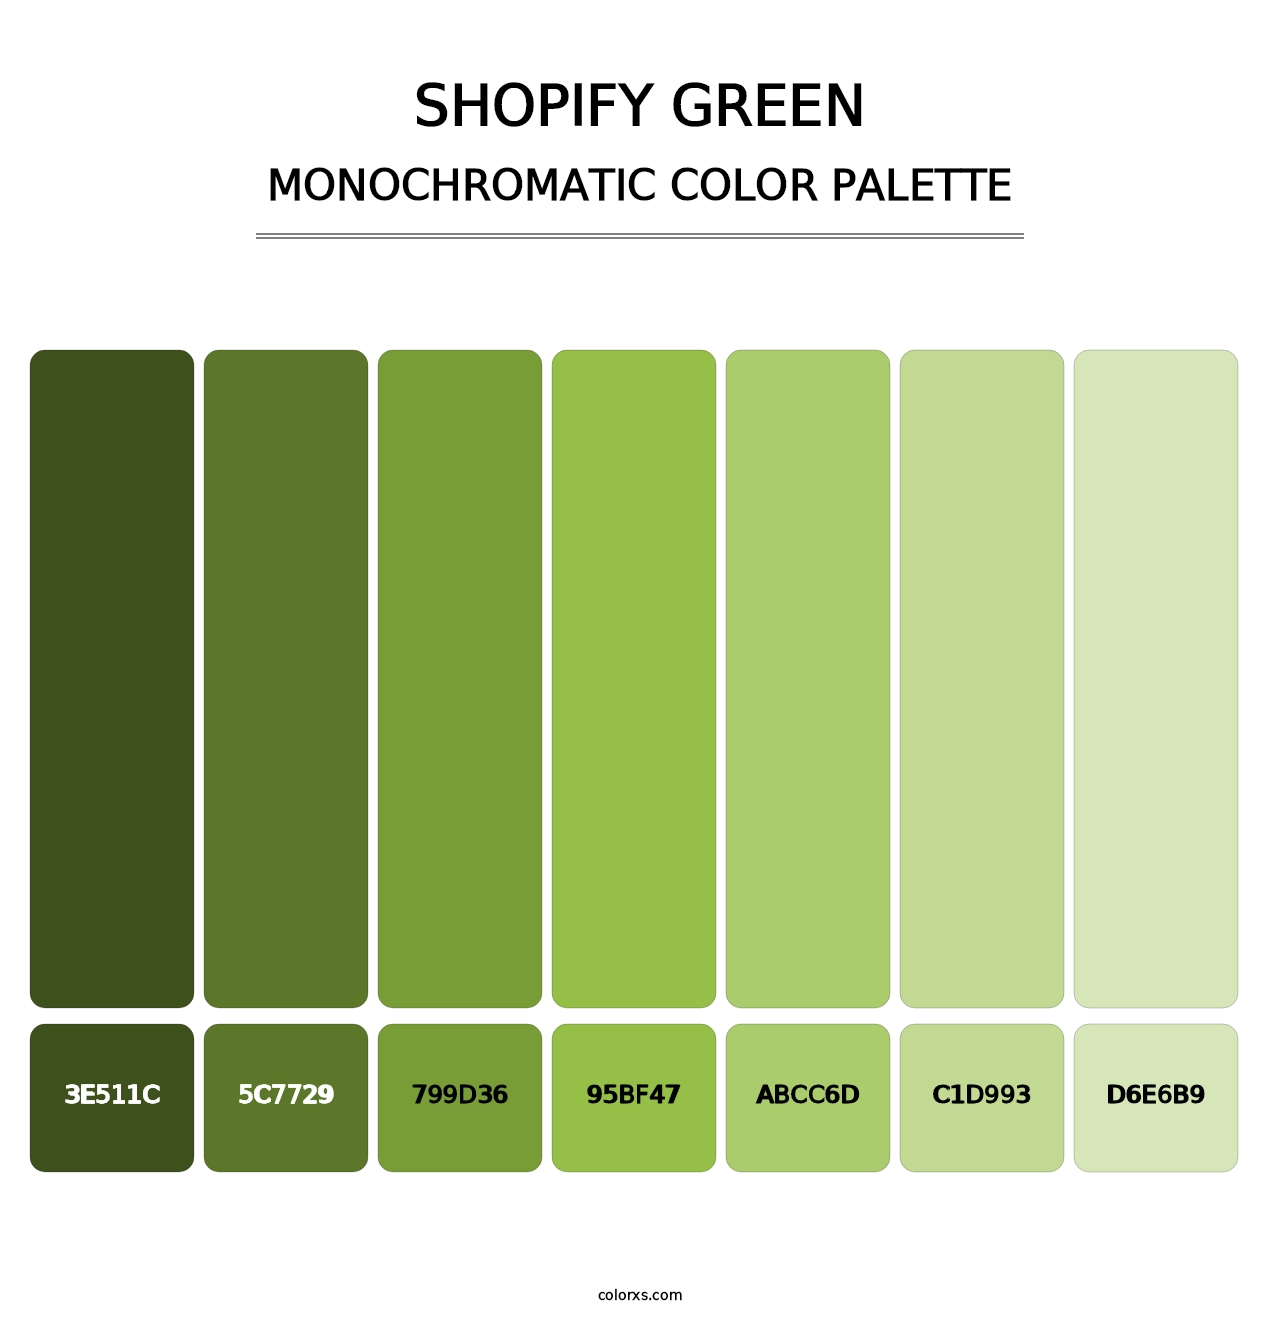 Shopify Green - Monochromatic Color Palette